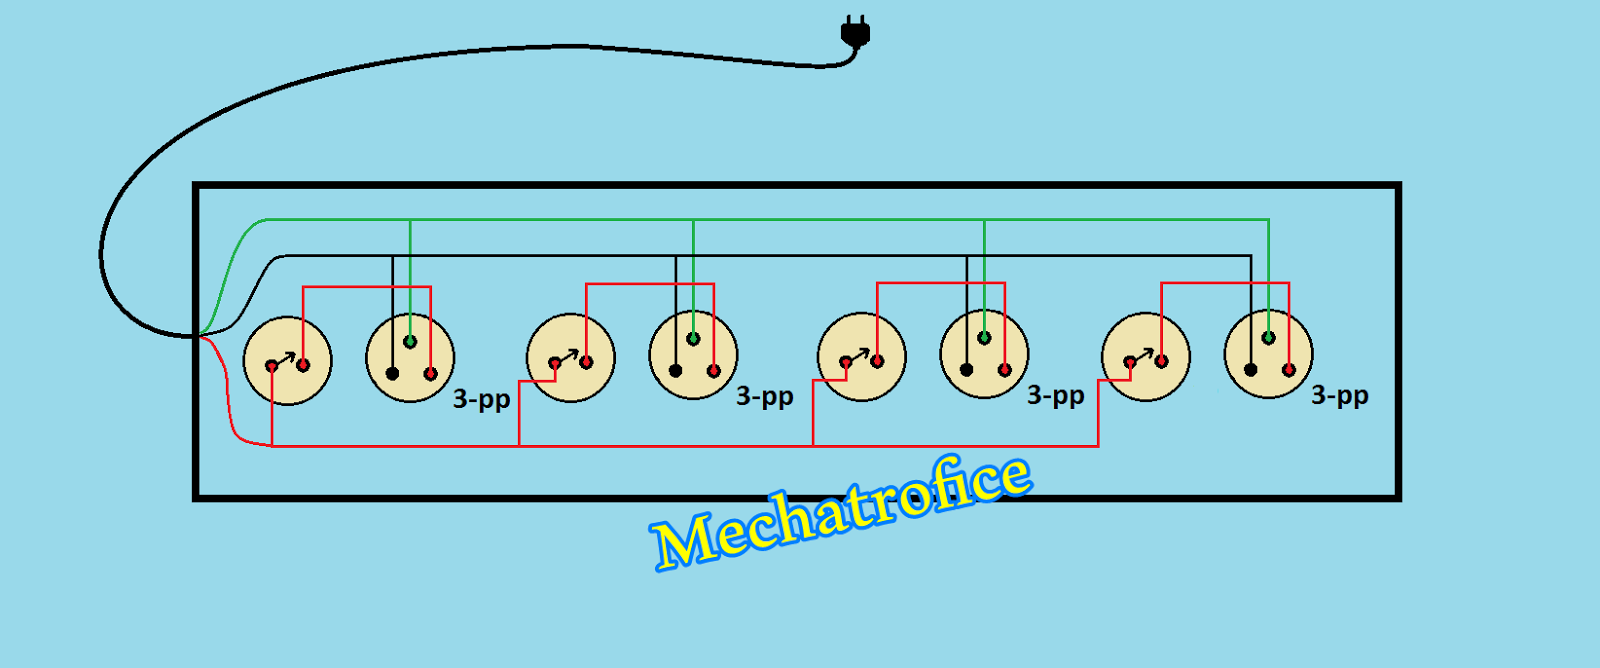 Extension cord wiring diagram | Mechatrofice